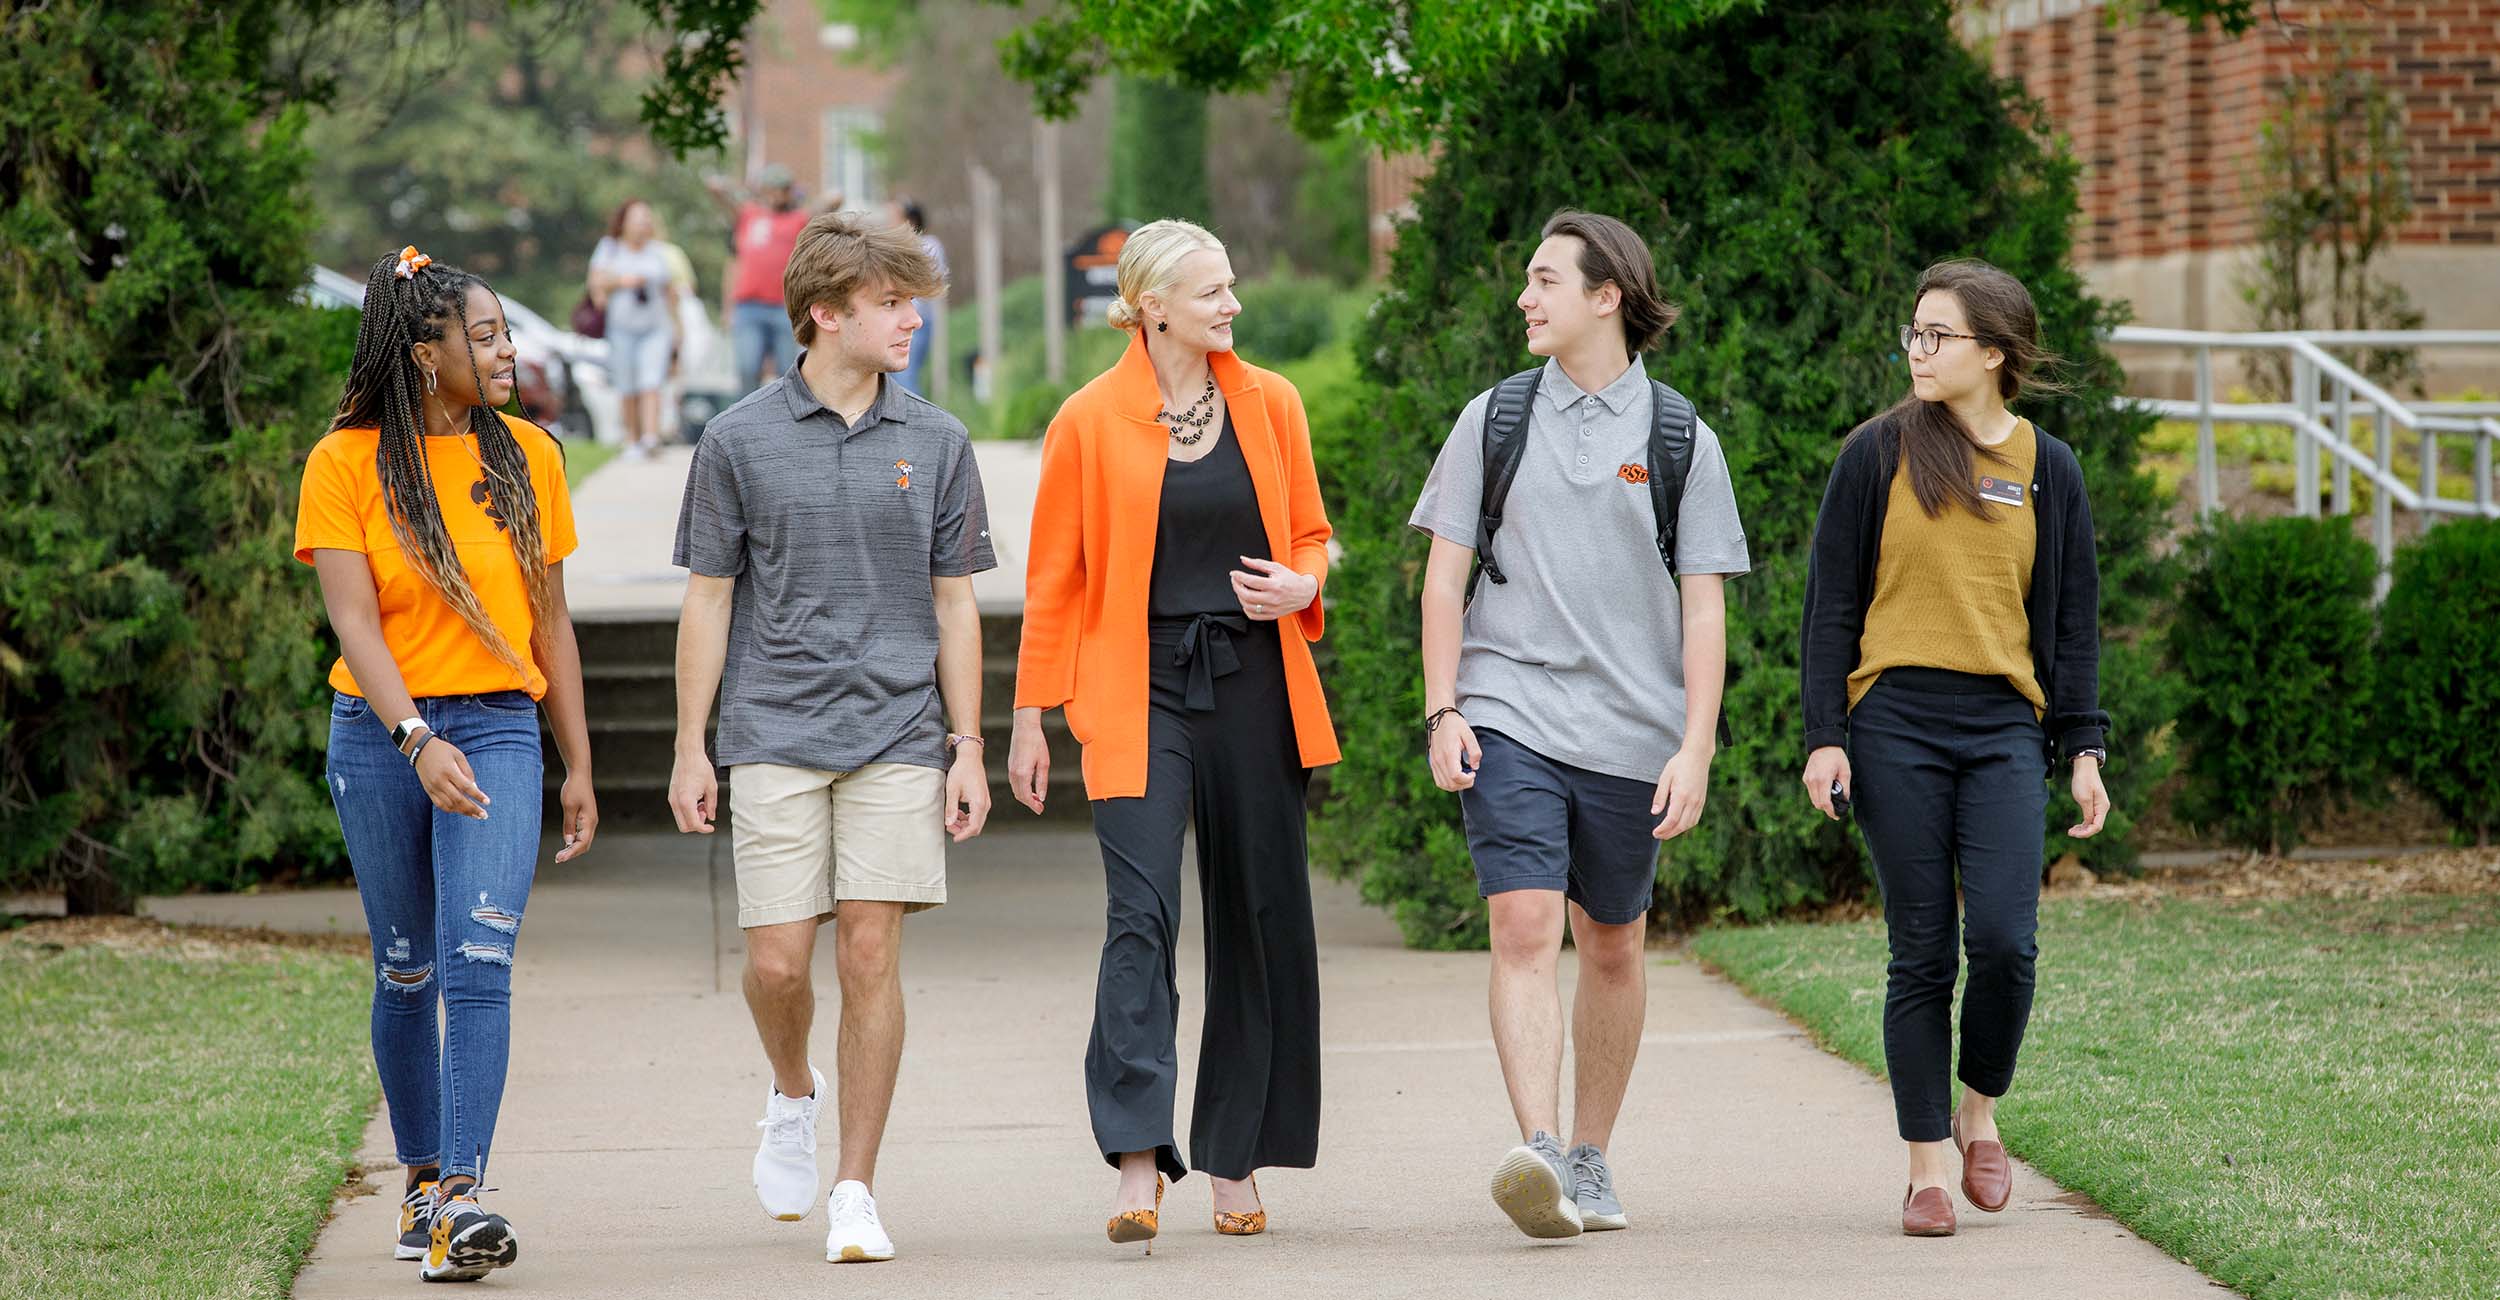 President Kayse Shrum walks down a sidewalk talking to students.